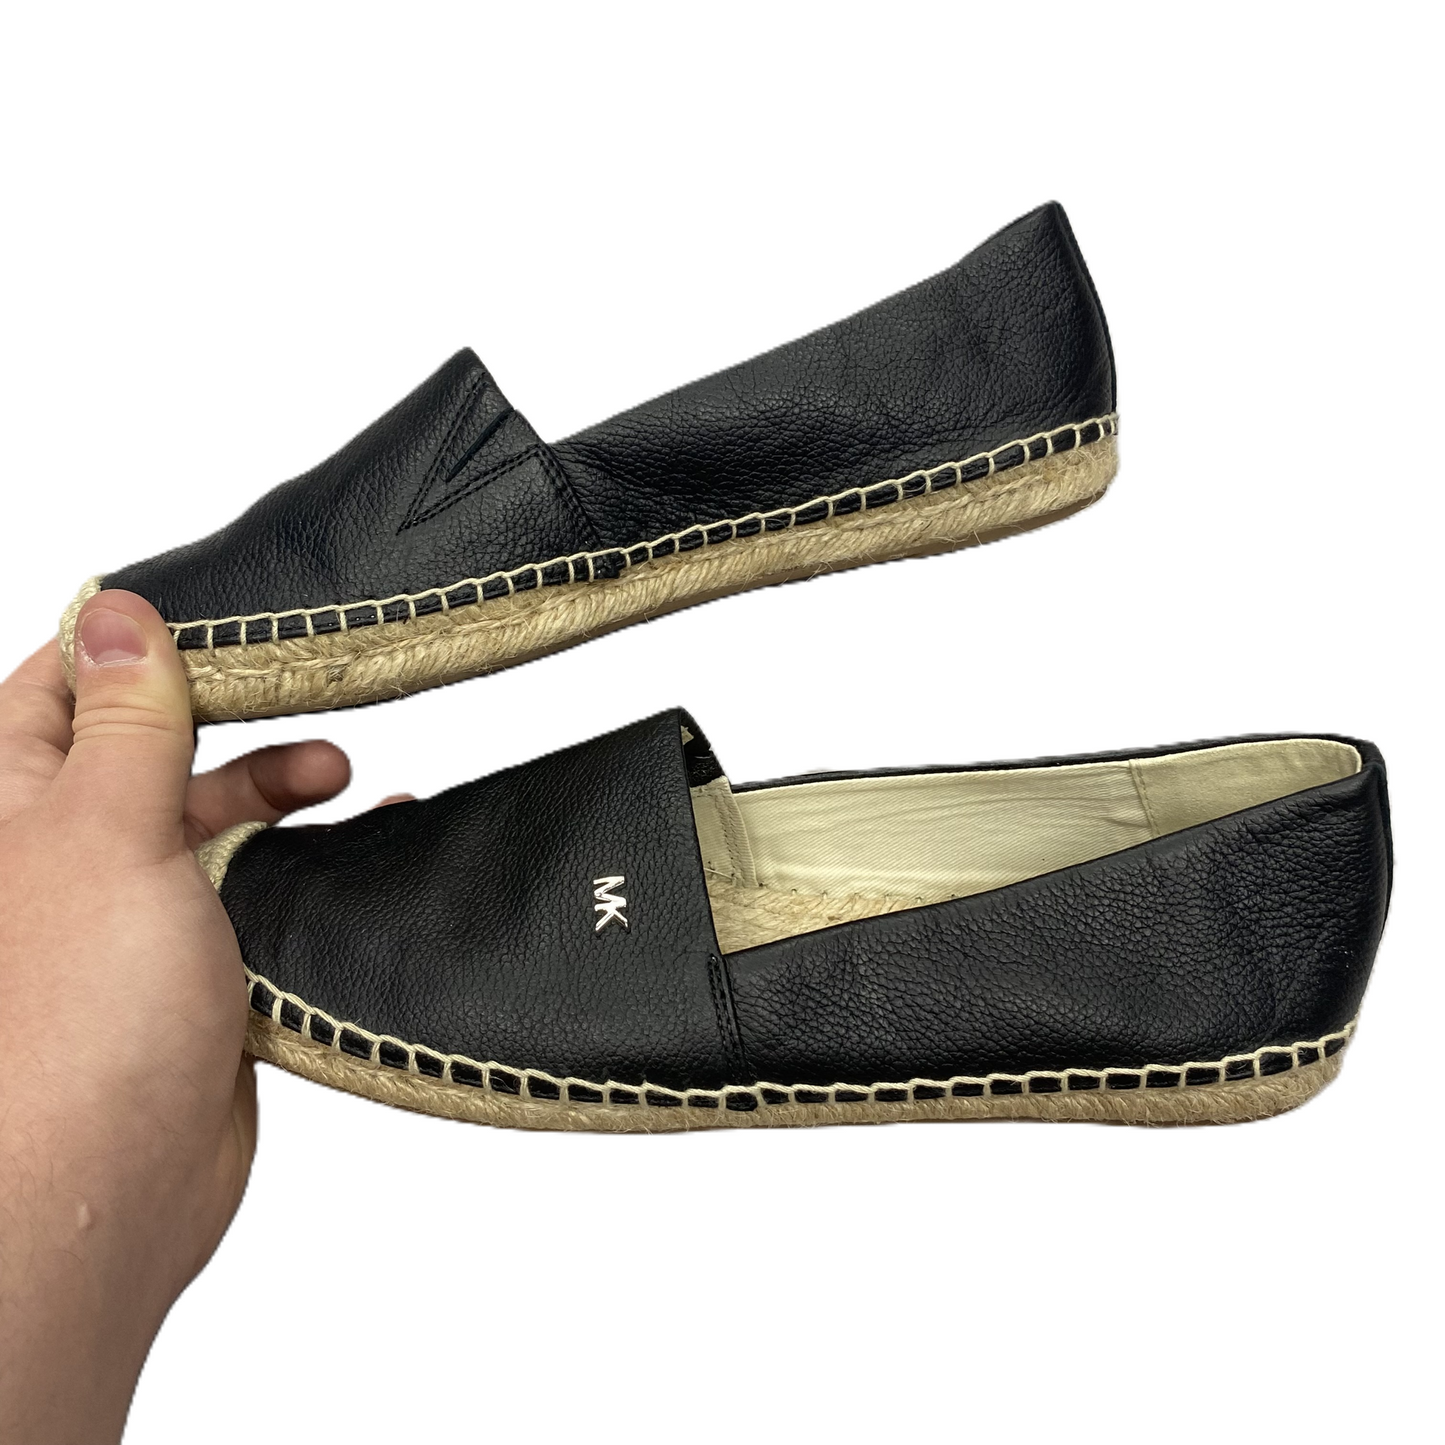 Black Sandals Flats By Michael By Michael Kors, Size: 7.5